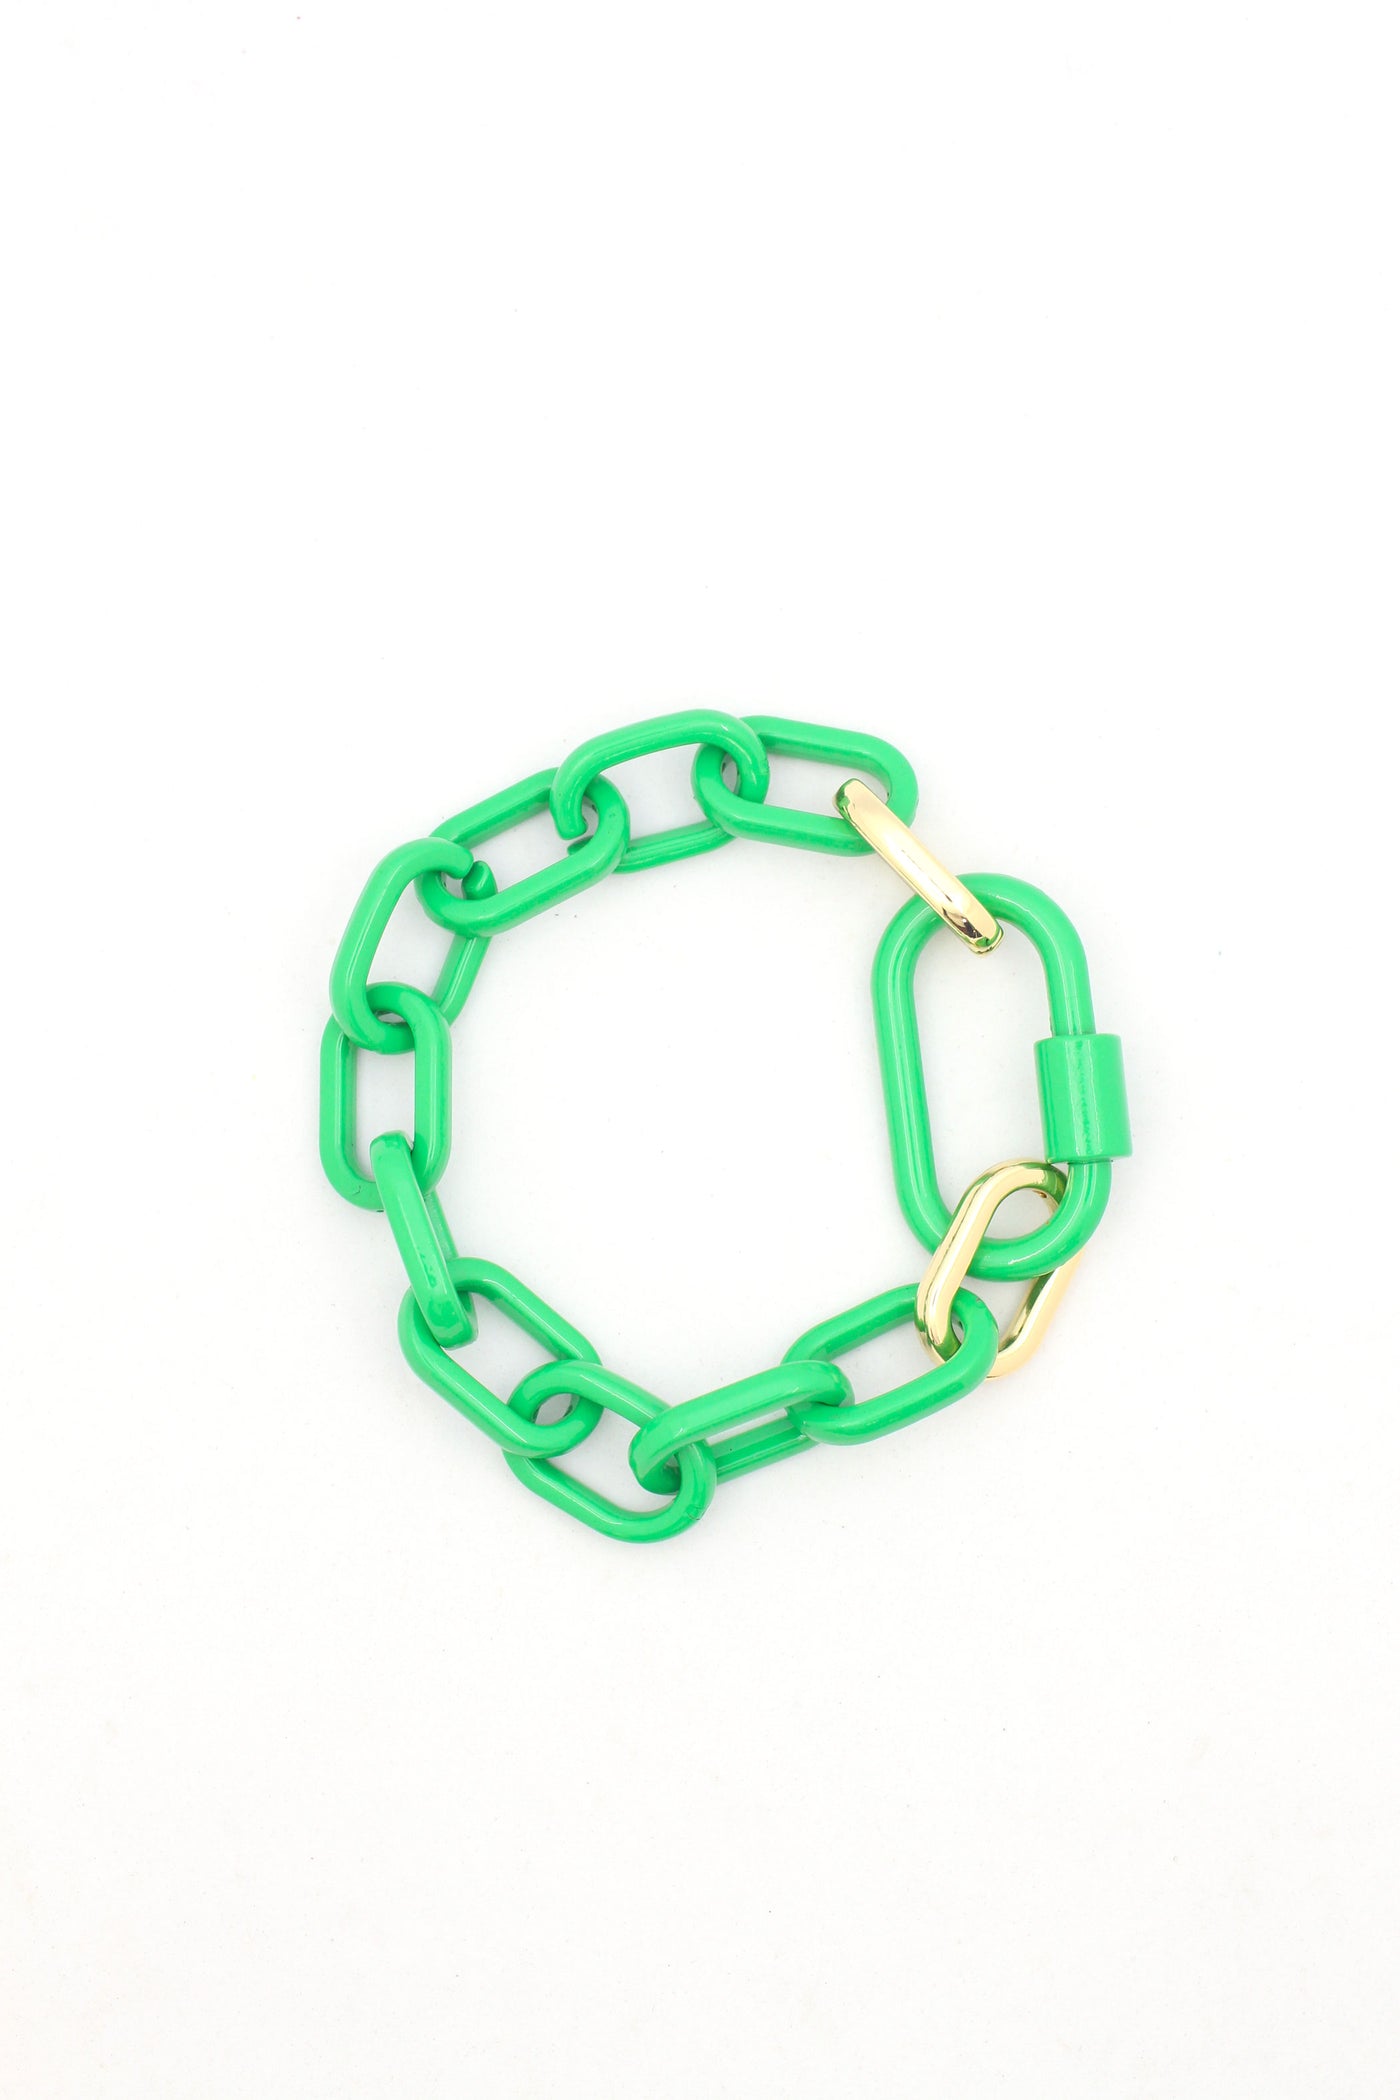 Green Mardi Gras Luxe Link Enamel Chain Bracelet with Carabiner Lock Clasp